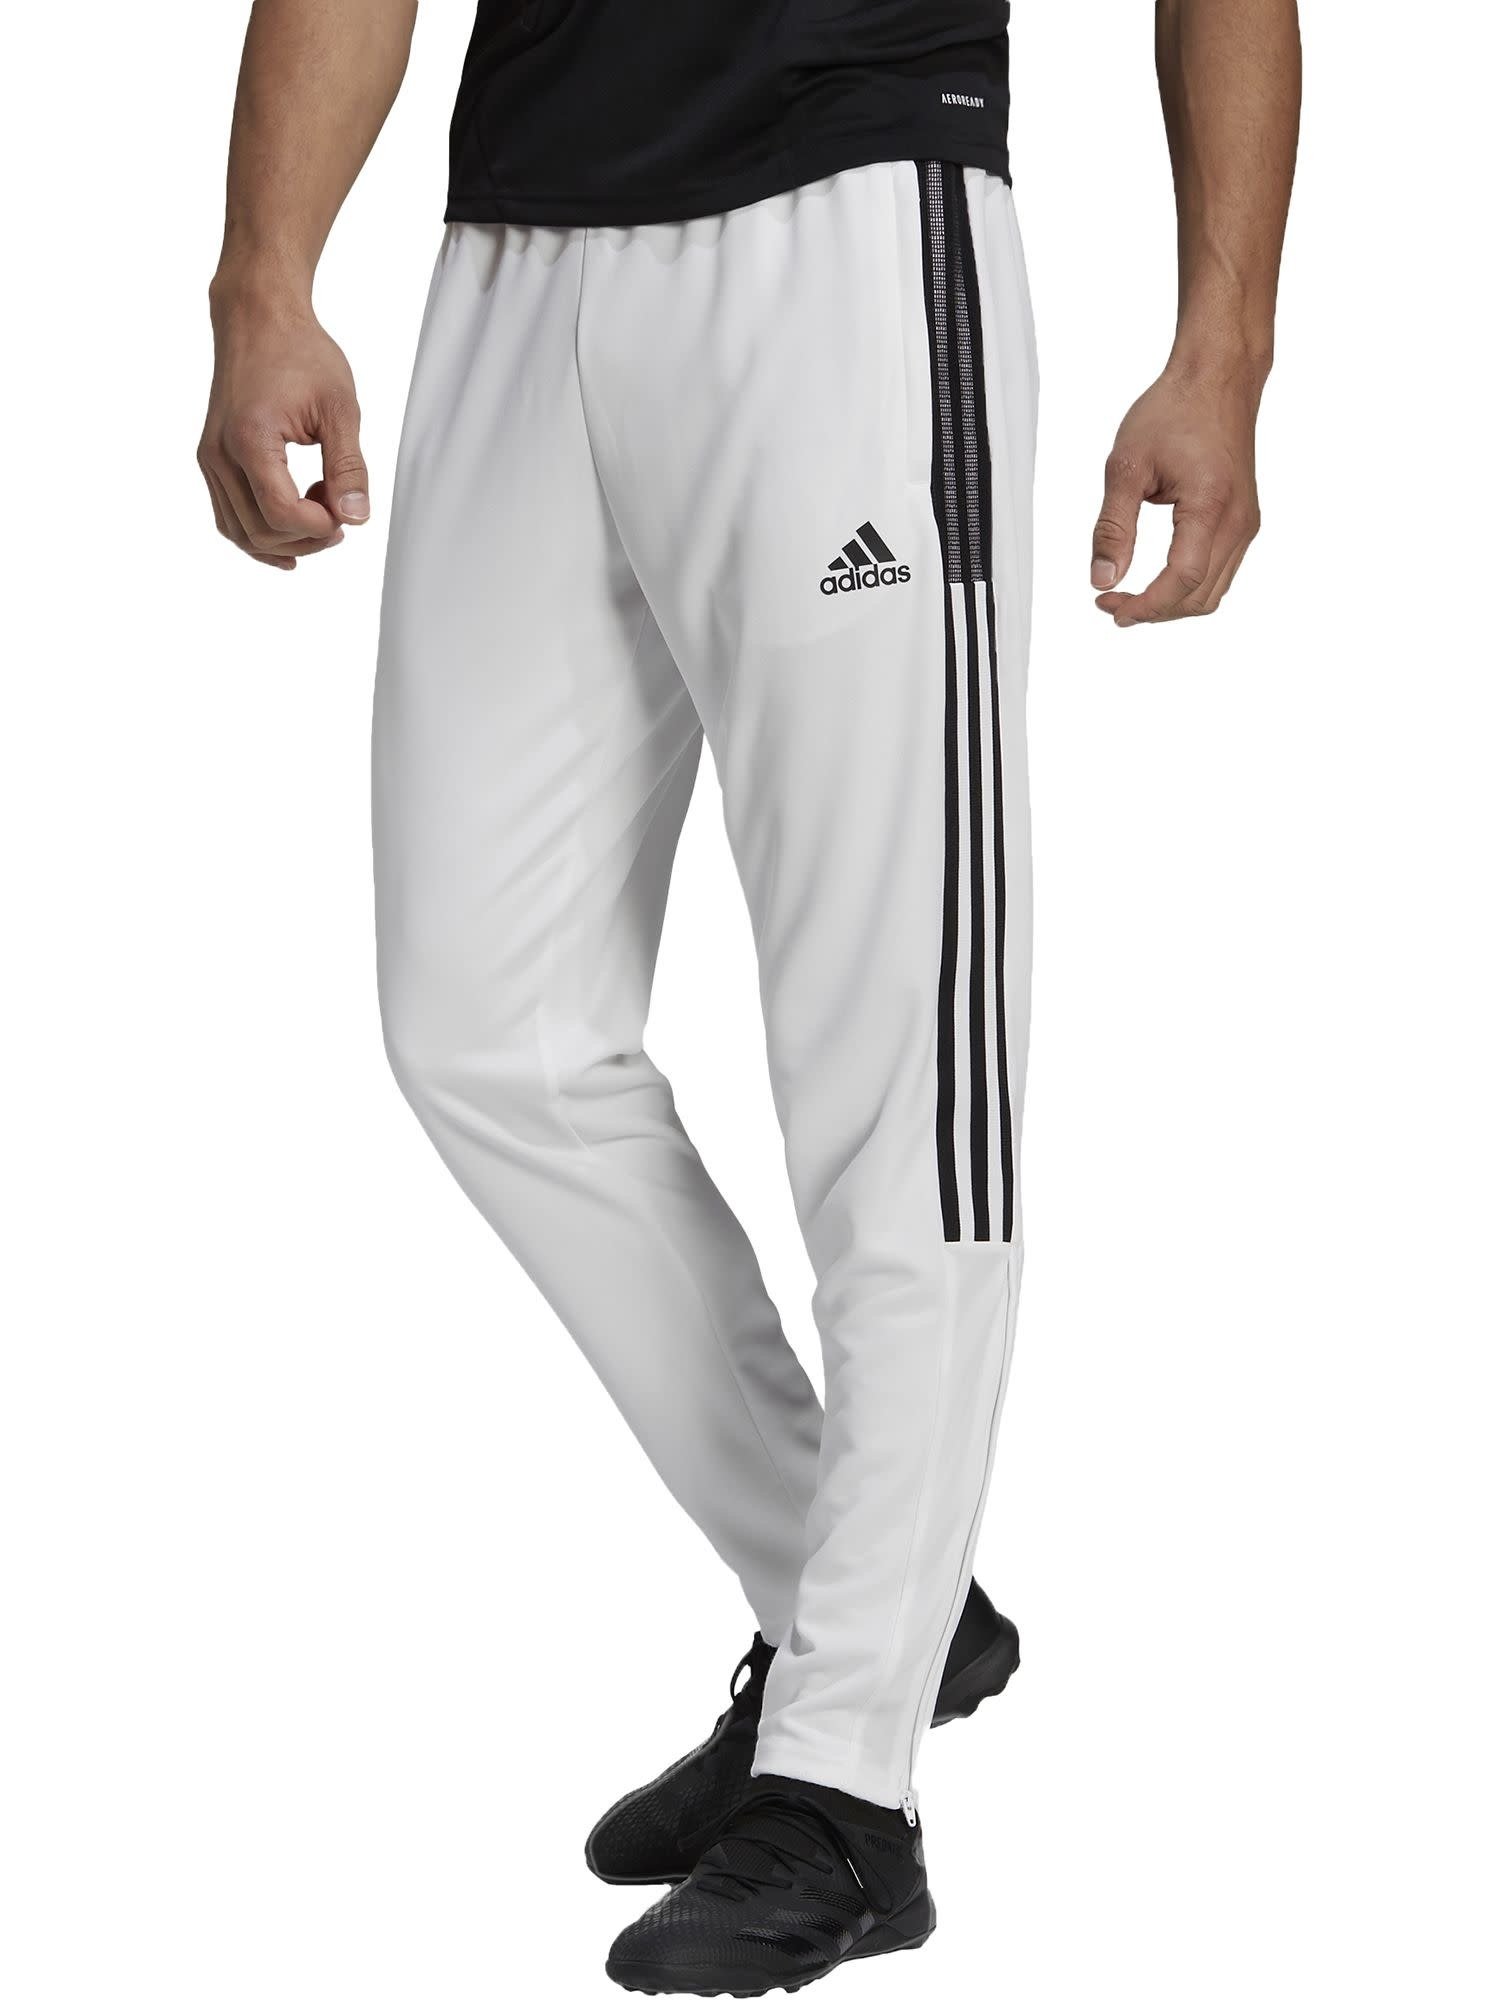 adidas adidas Tiro 21 Performance Training Pants  White  Soccerium